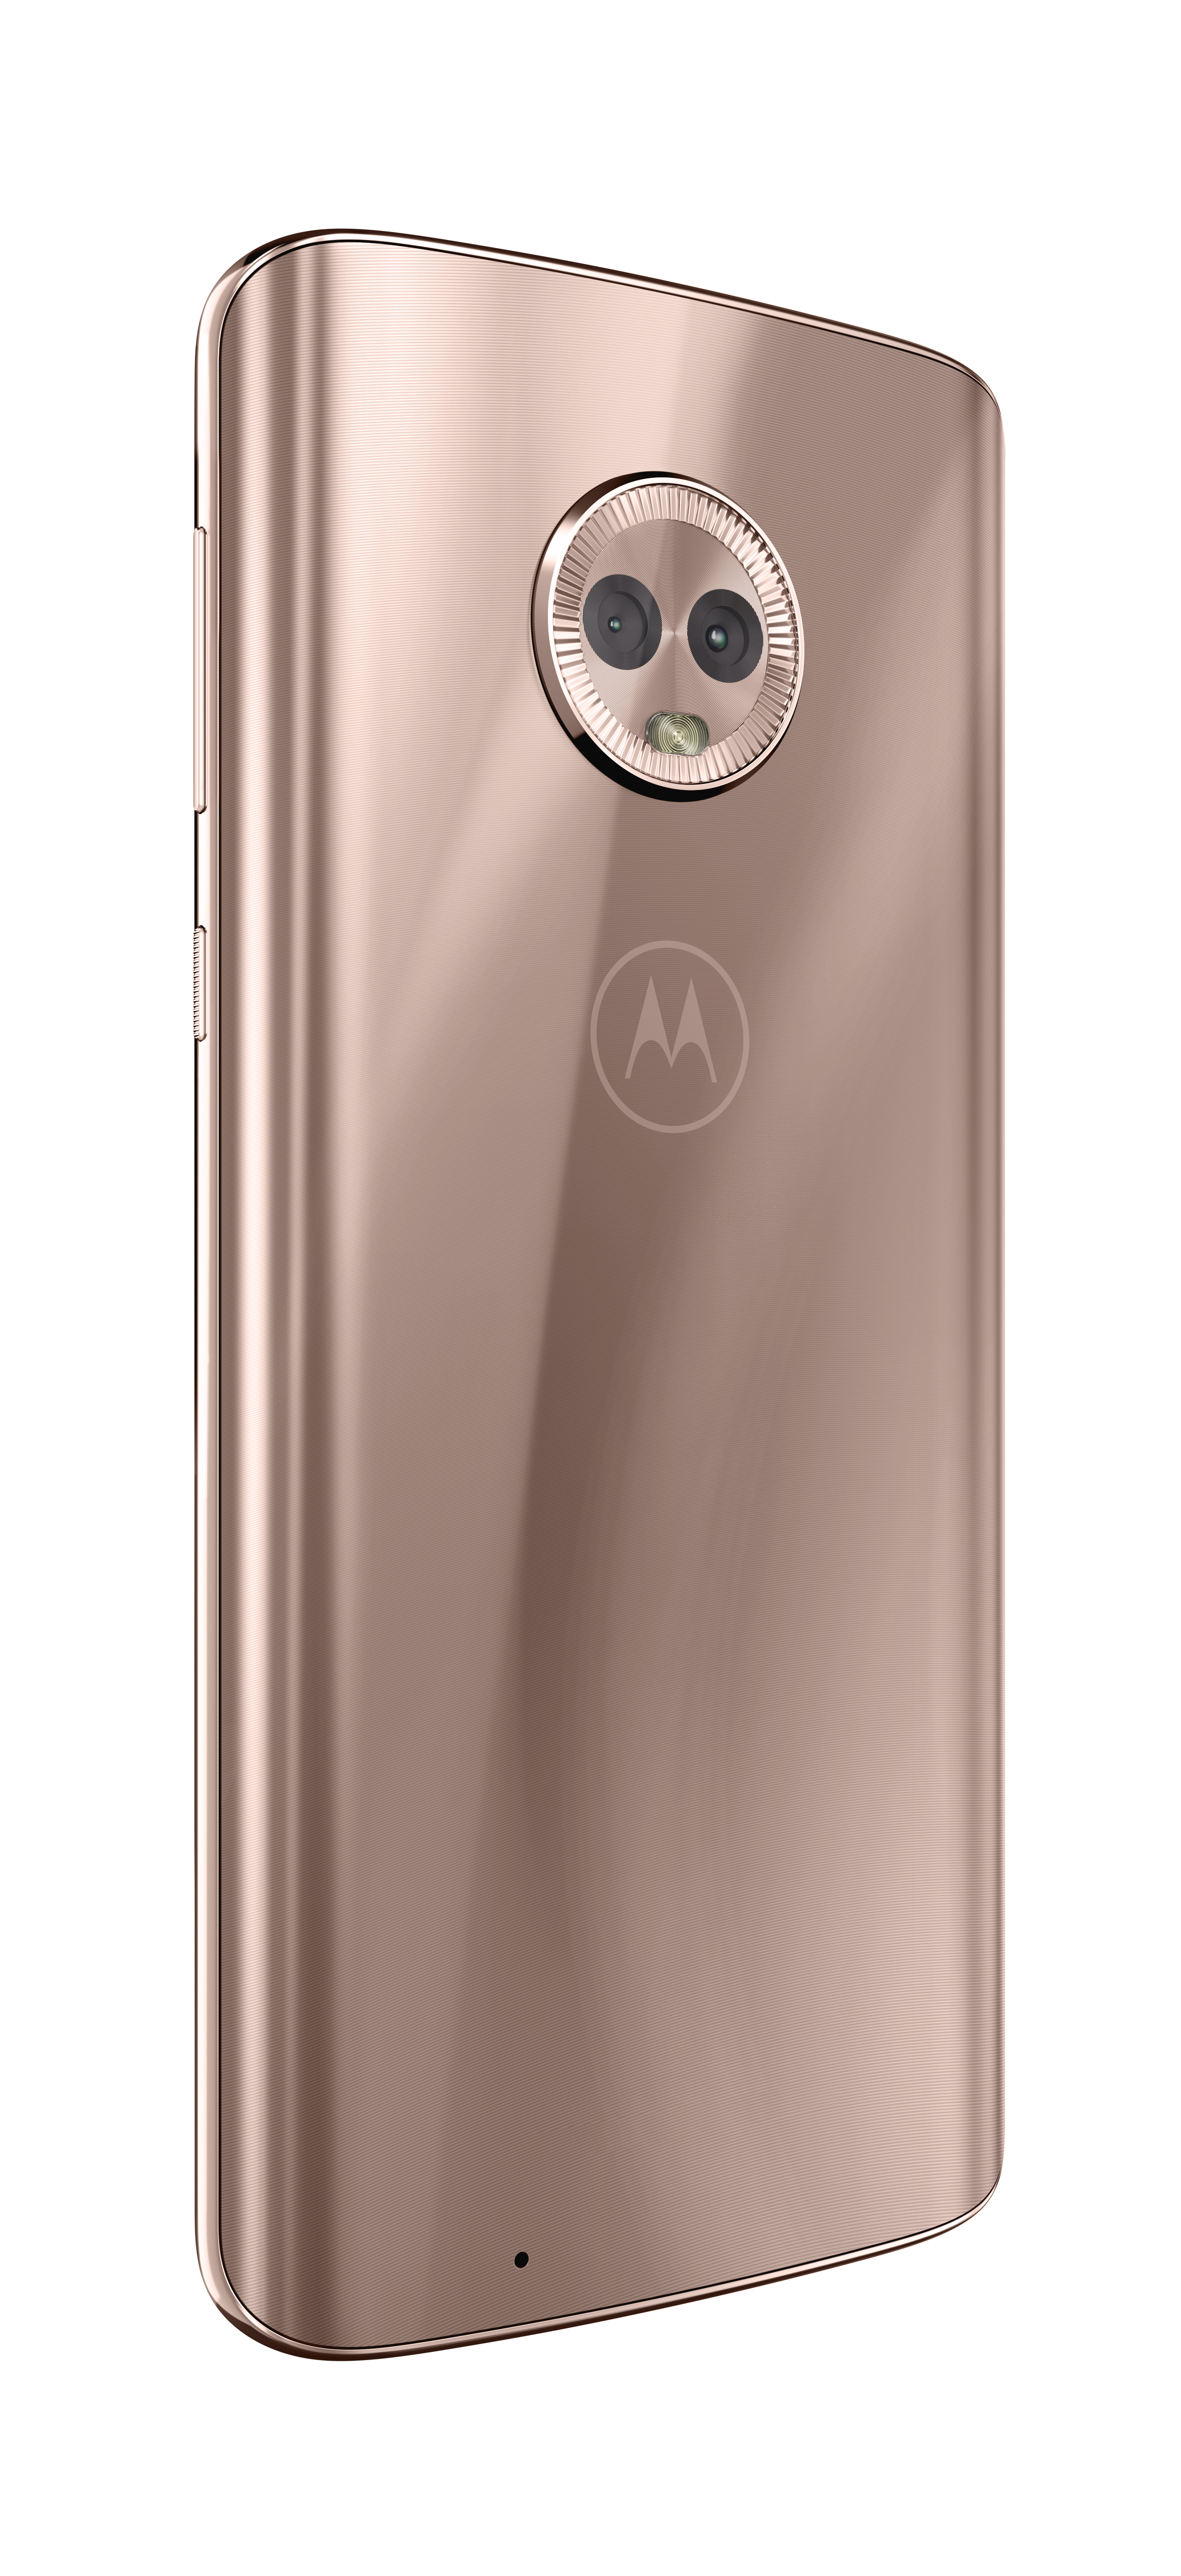 Motorola Moto G6 32GB Unlocked Smartphone Oyster Blush - image 2 of 8